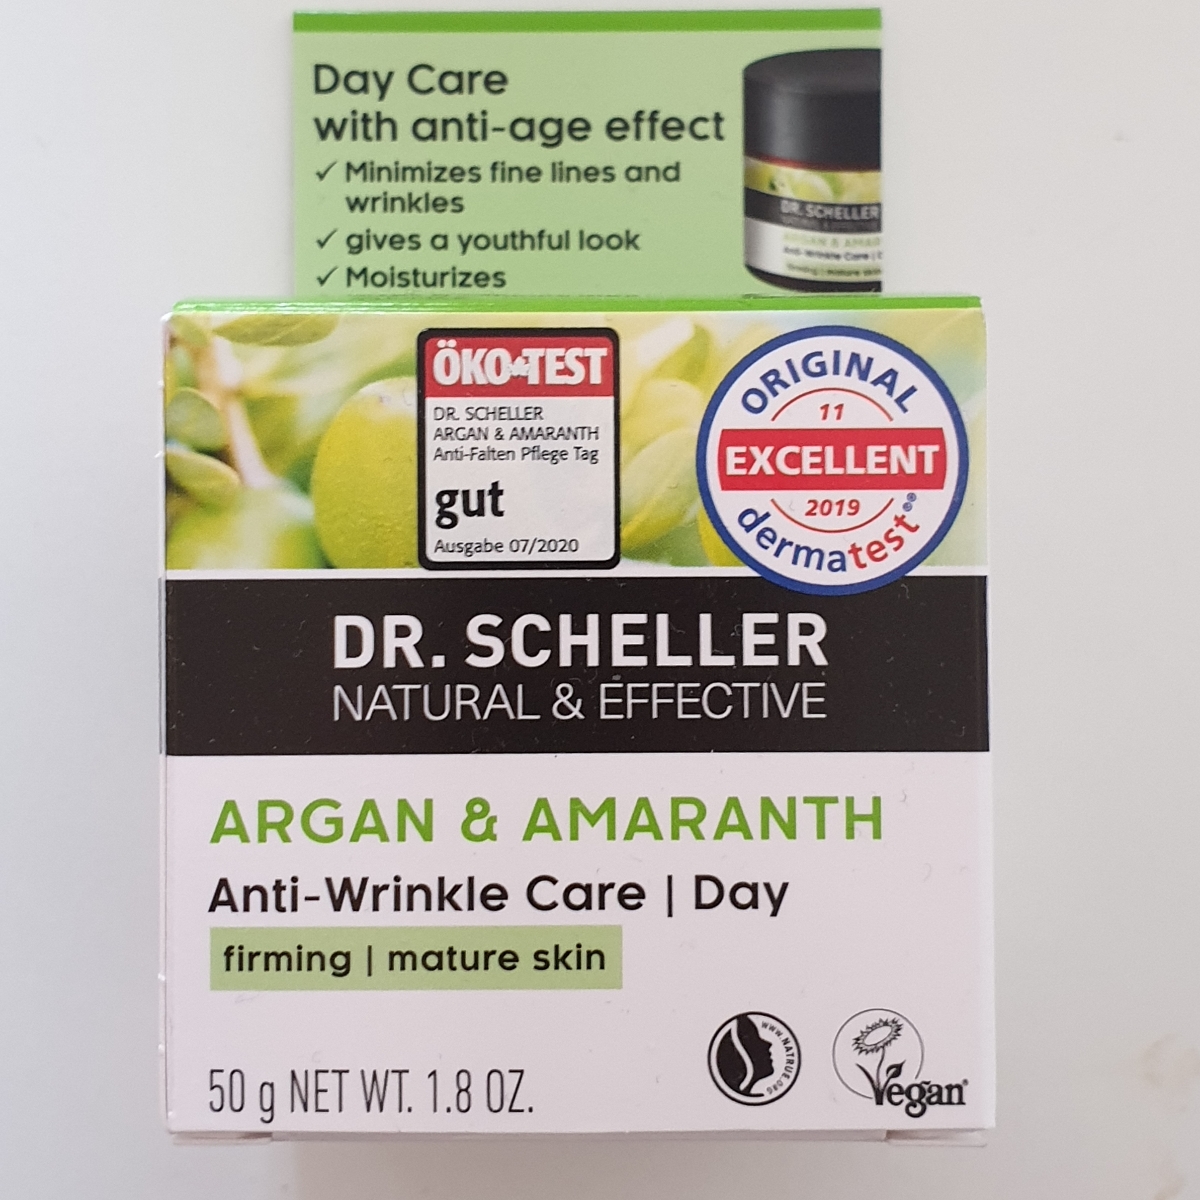 Dr. Scheller ARGAN & AMARANTH Anti-Wrinkle Care, Day Reviews